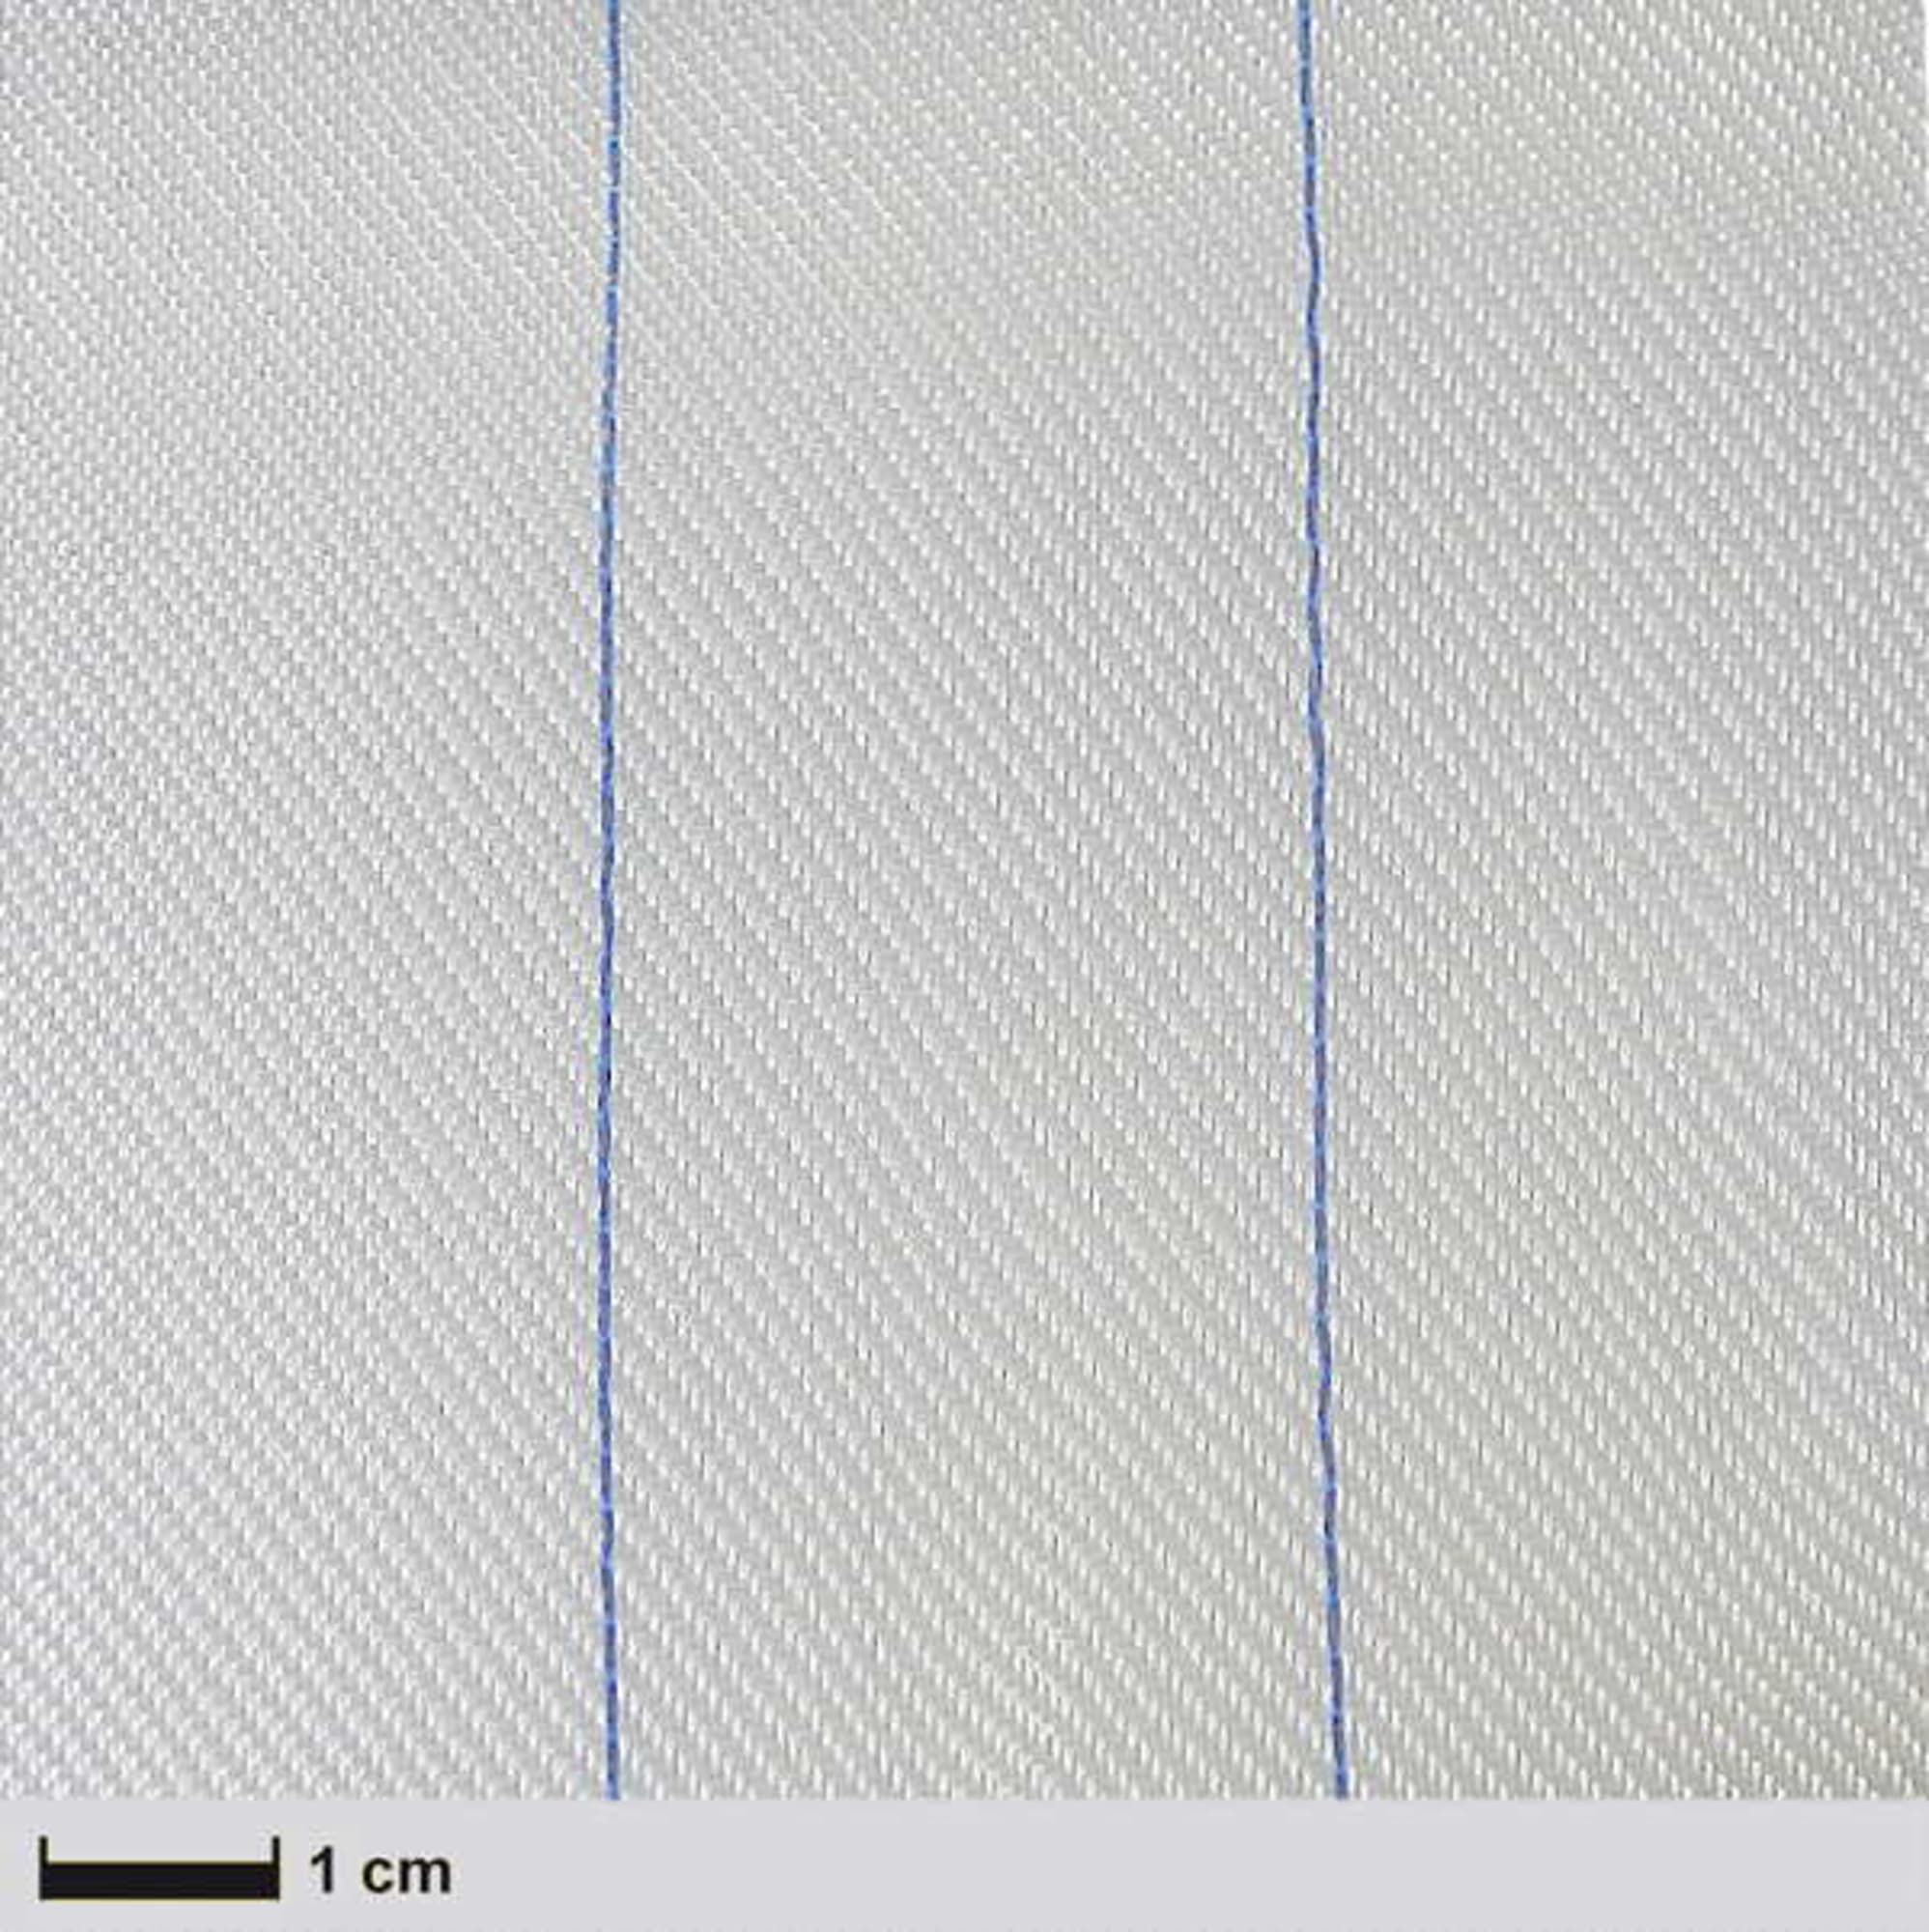 Peel ply 100 g/m² (twill weave) 100 cm